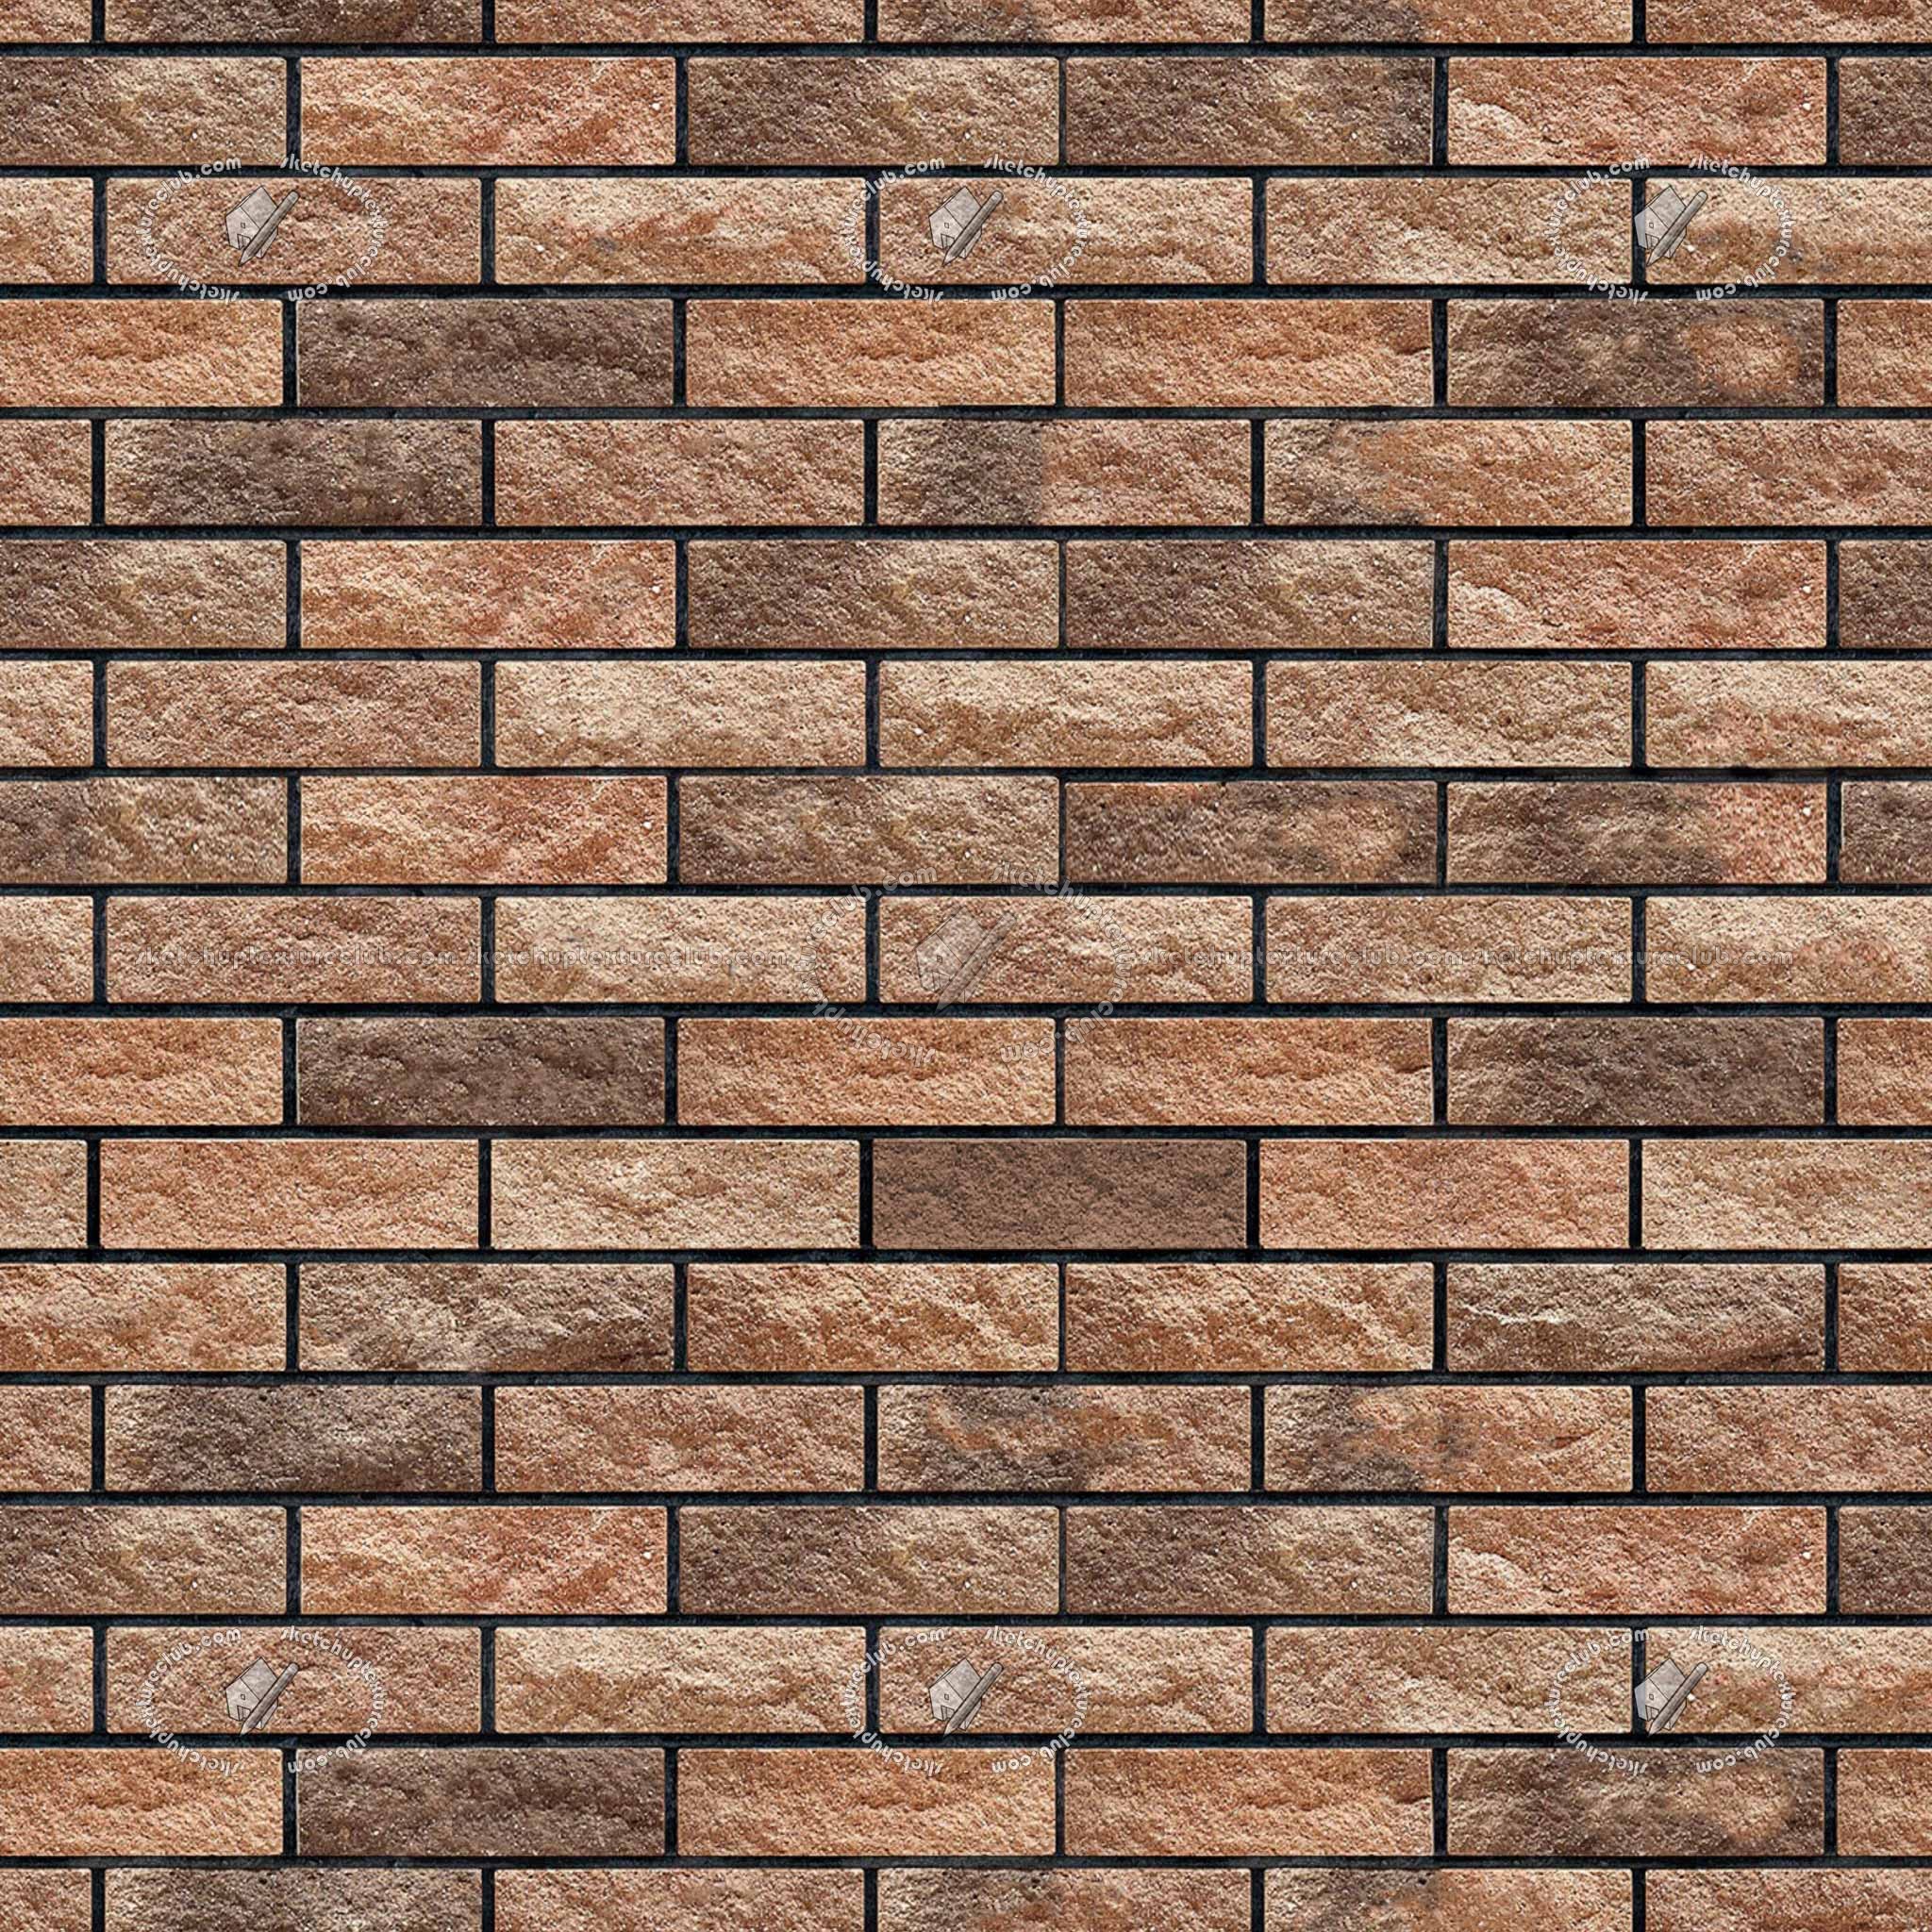 Ceramic Exterior Wall Tiles Texture, Tiles For Less